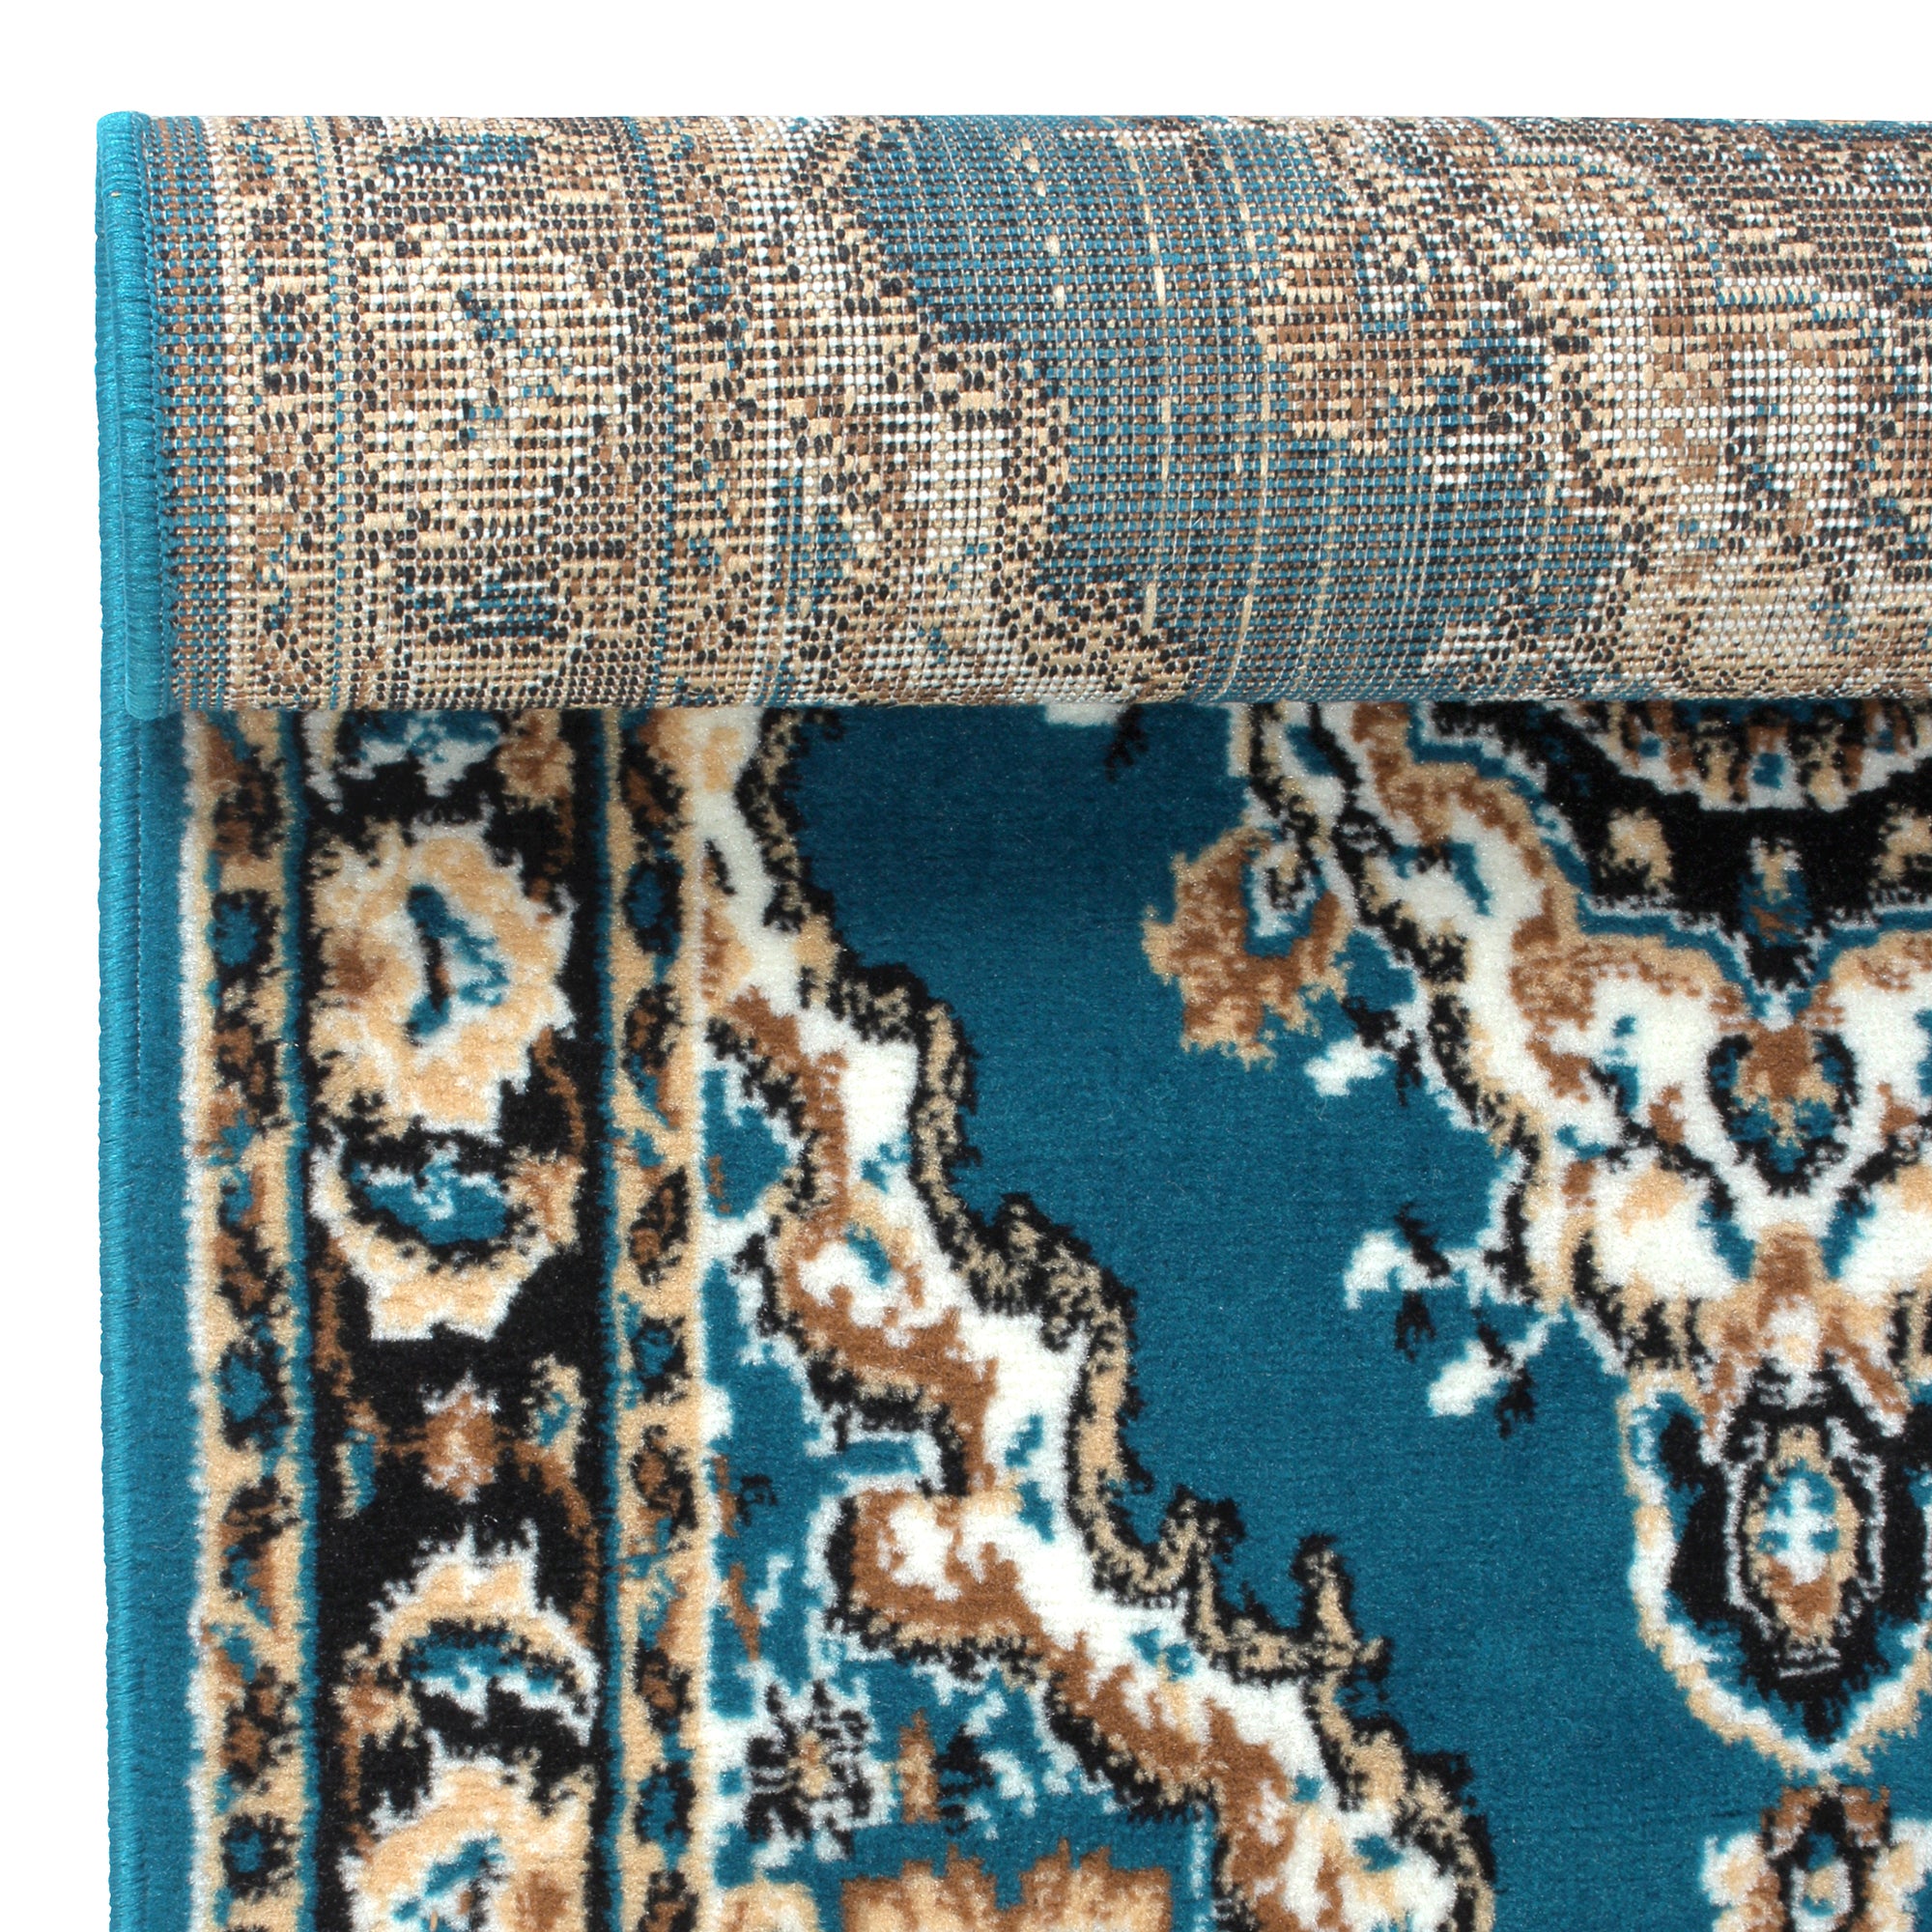 Blue Motif Rustico Rug/Carpet with Anti Skid Backing